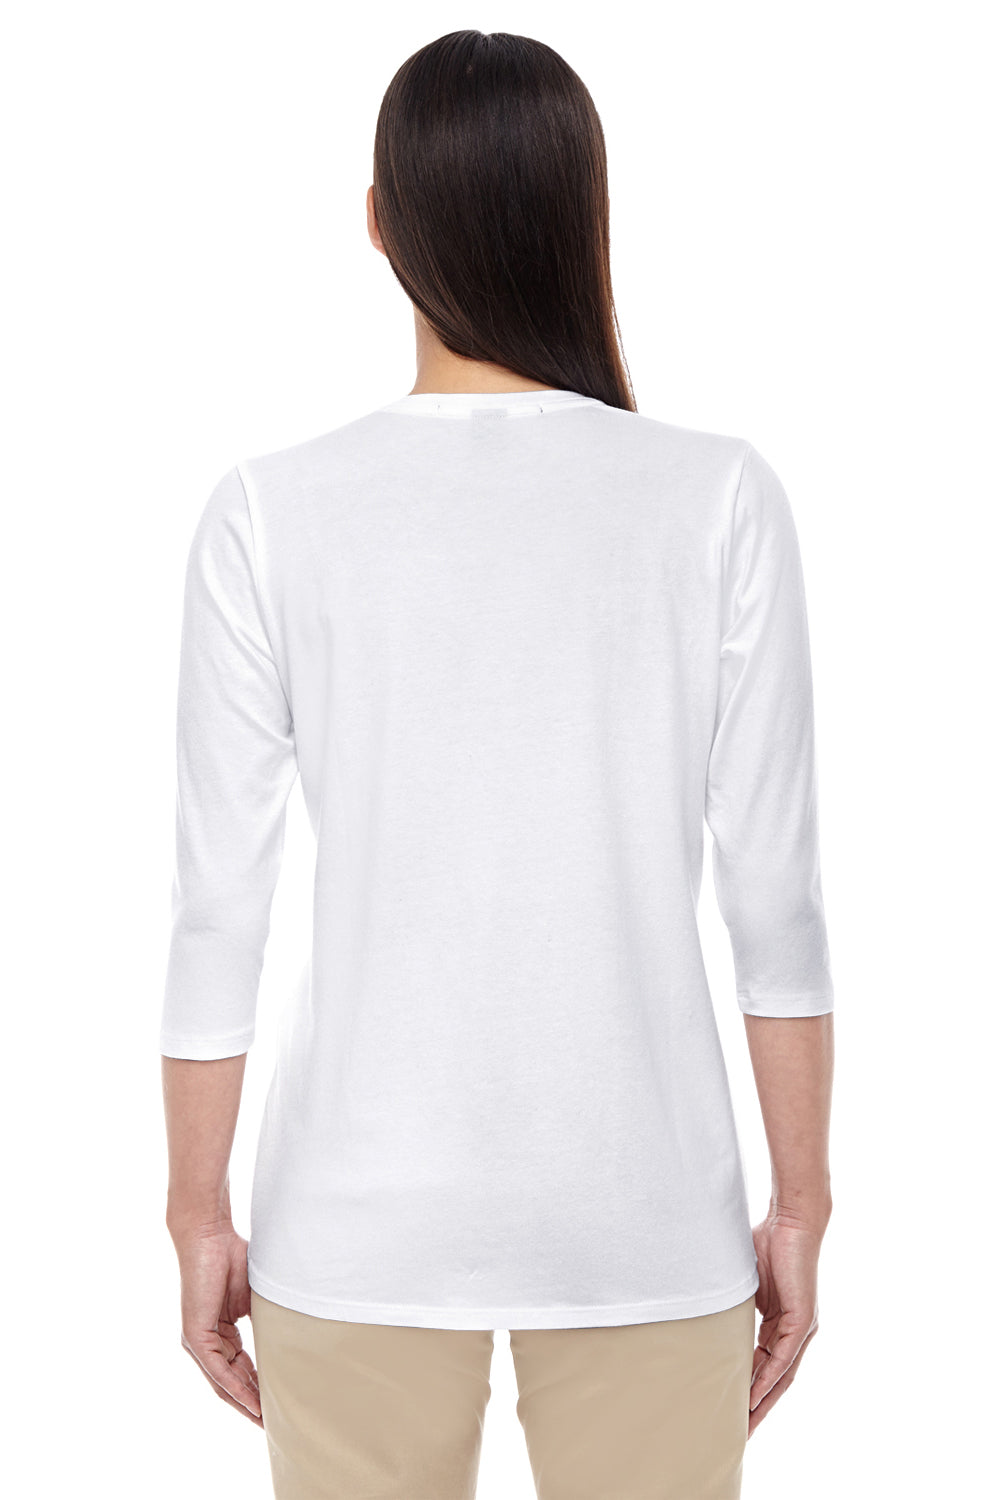 Devon & Jones DP184W Womens Perfect Fit 3/4 Sleeve V-Neck T-Shirt White Back